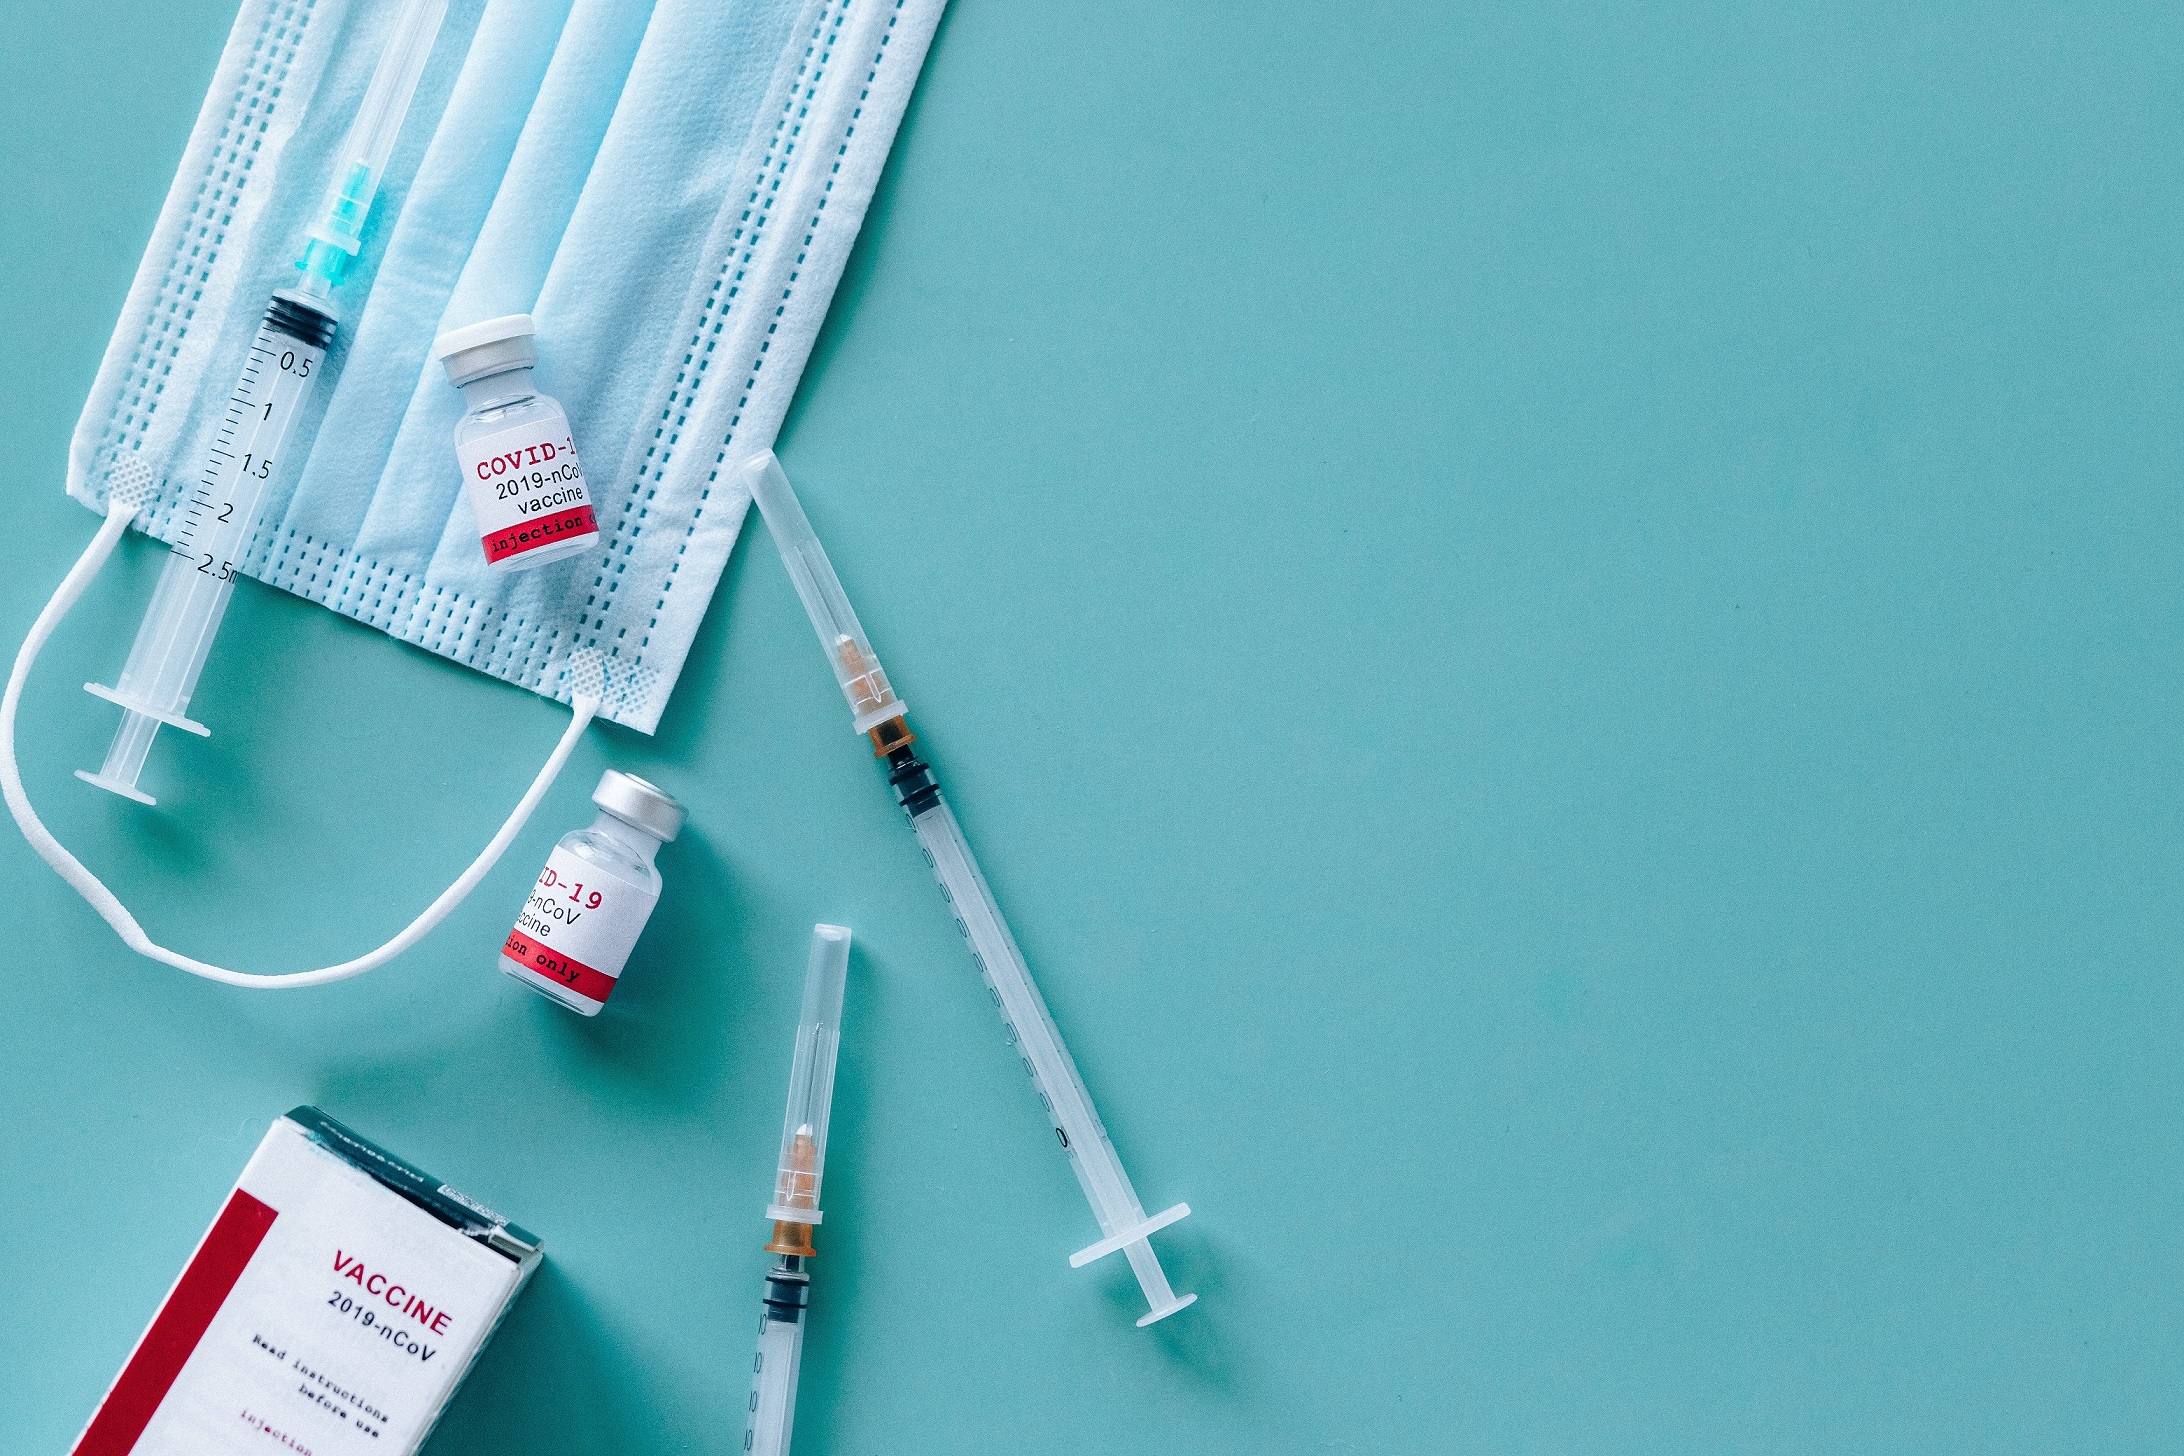 COVID-19 vaccine and needles 